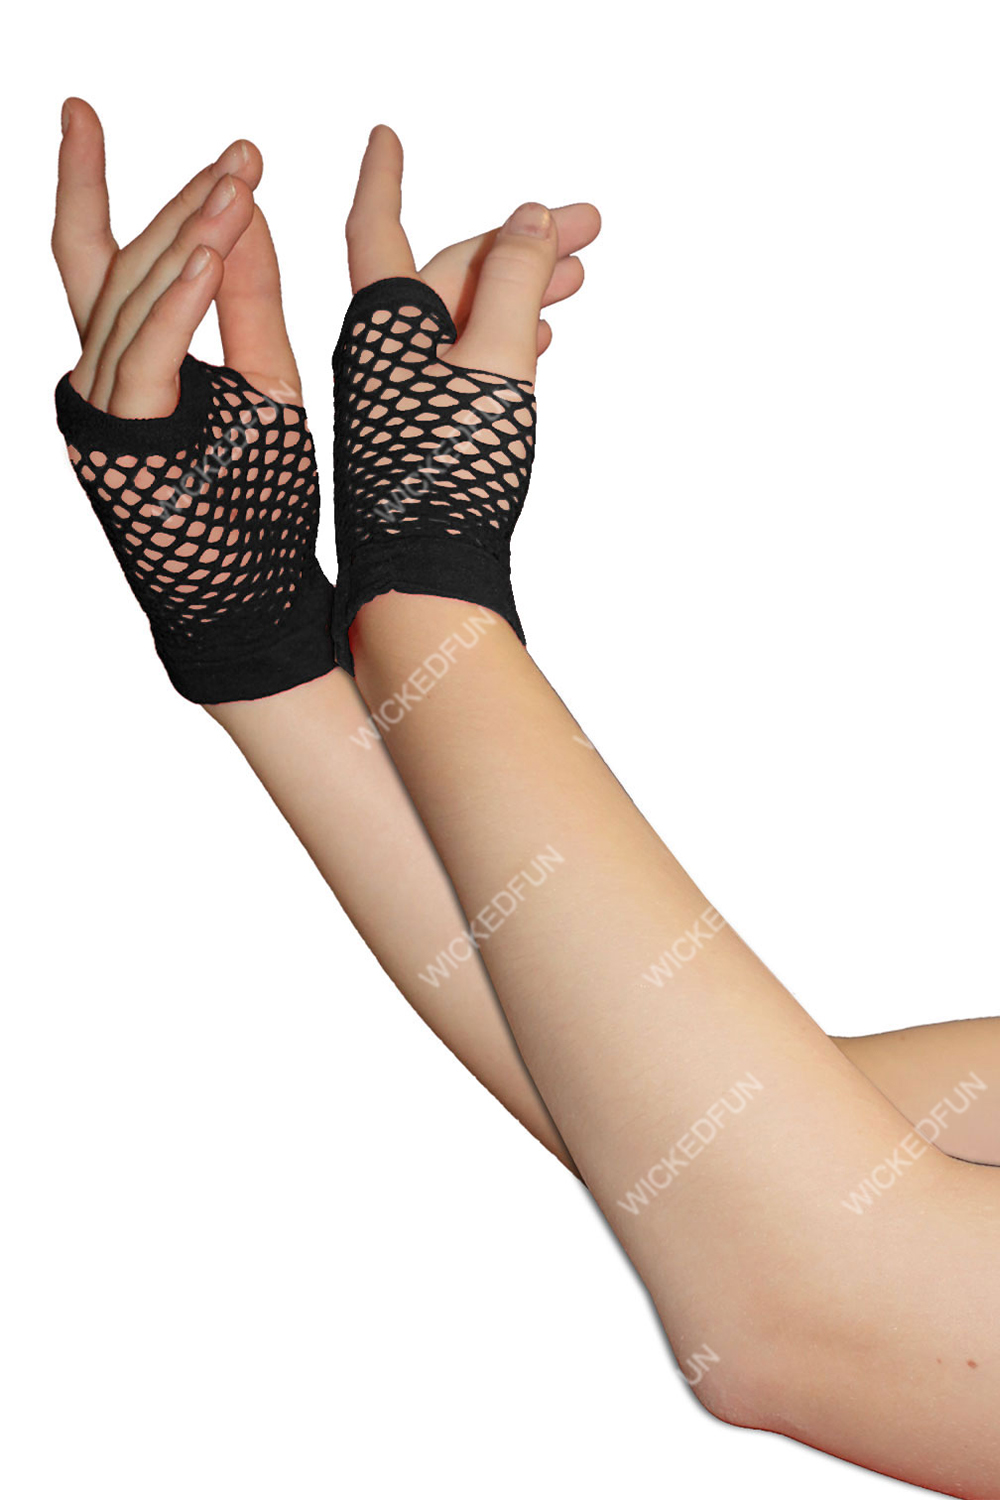 Wickedfun Black Fingerless Short Fishnet Gloves (Pack of 12 pairs)